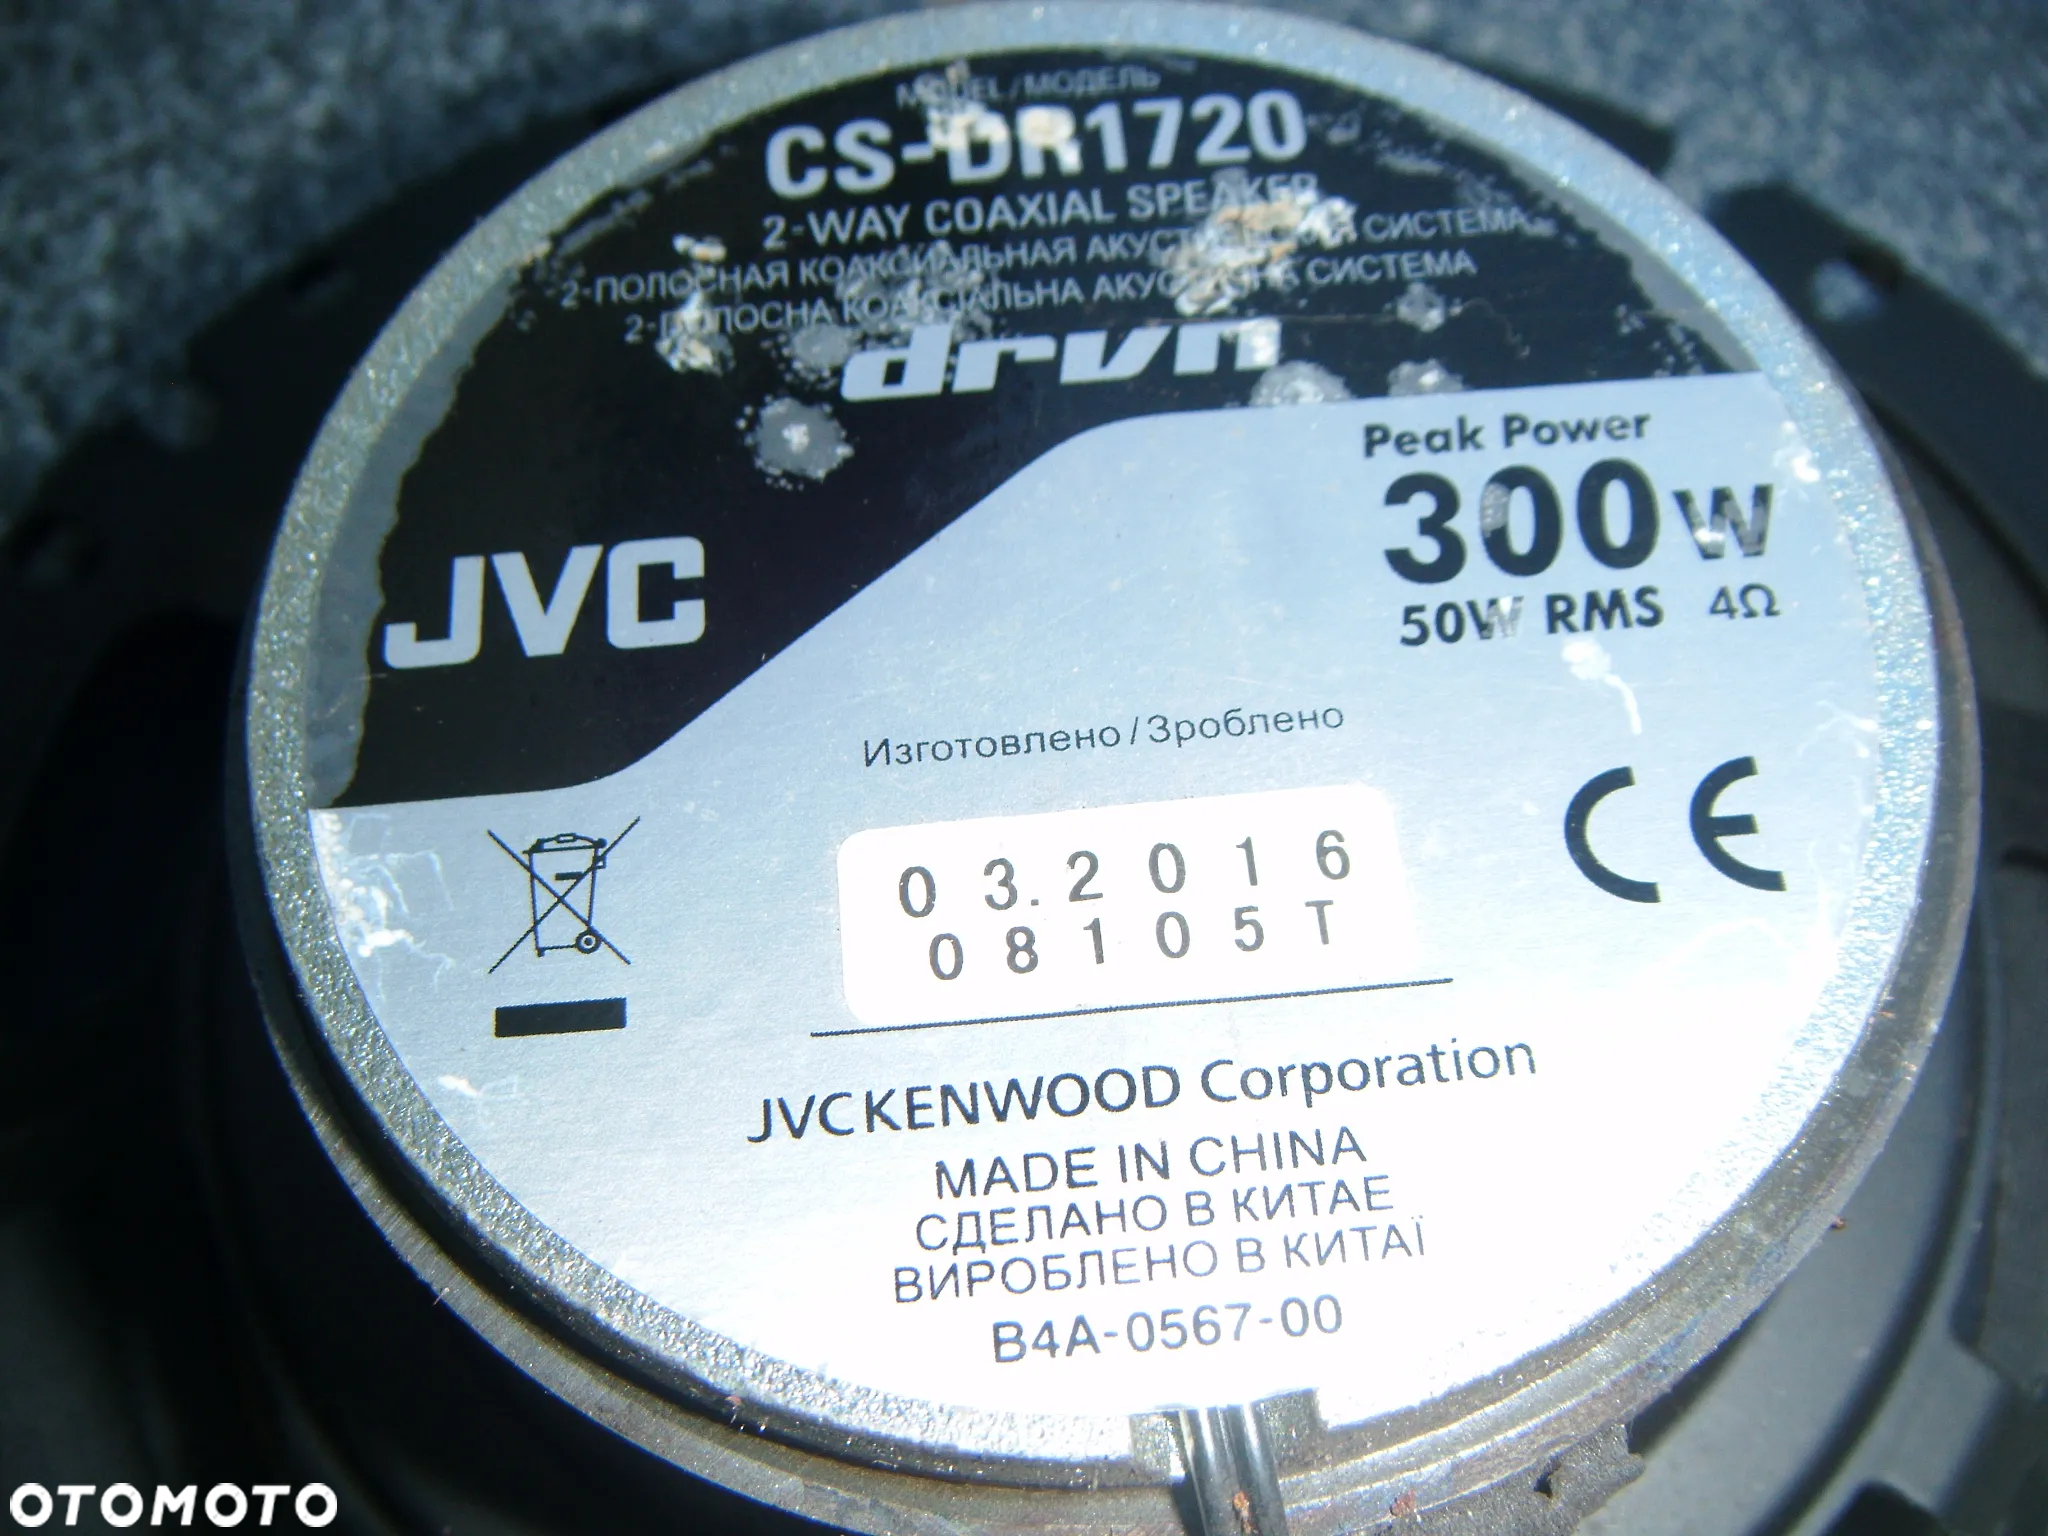 głośniki  JVC  cd-dr1720 - 3